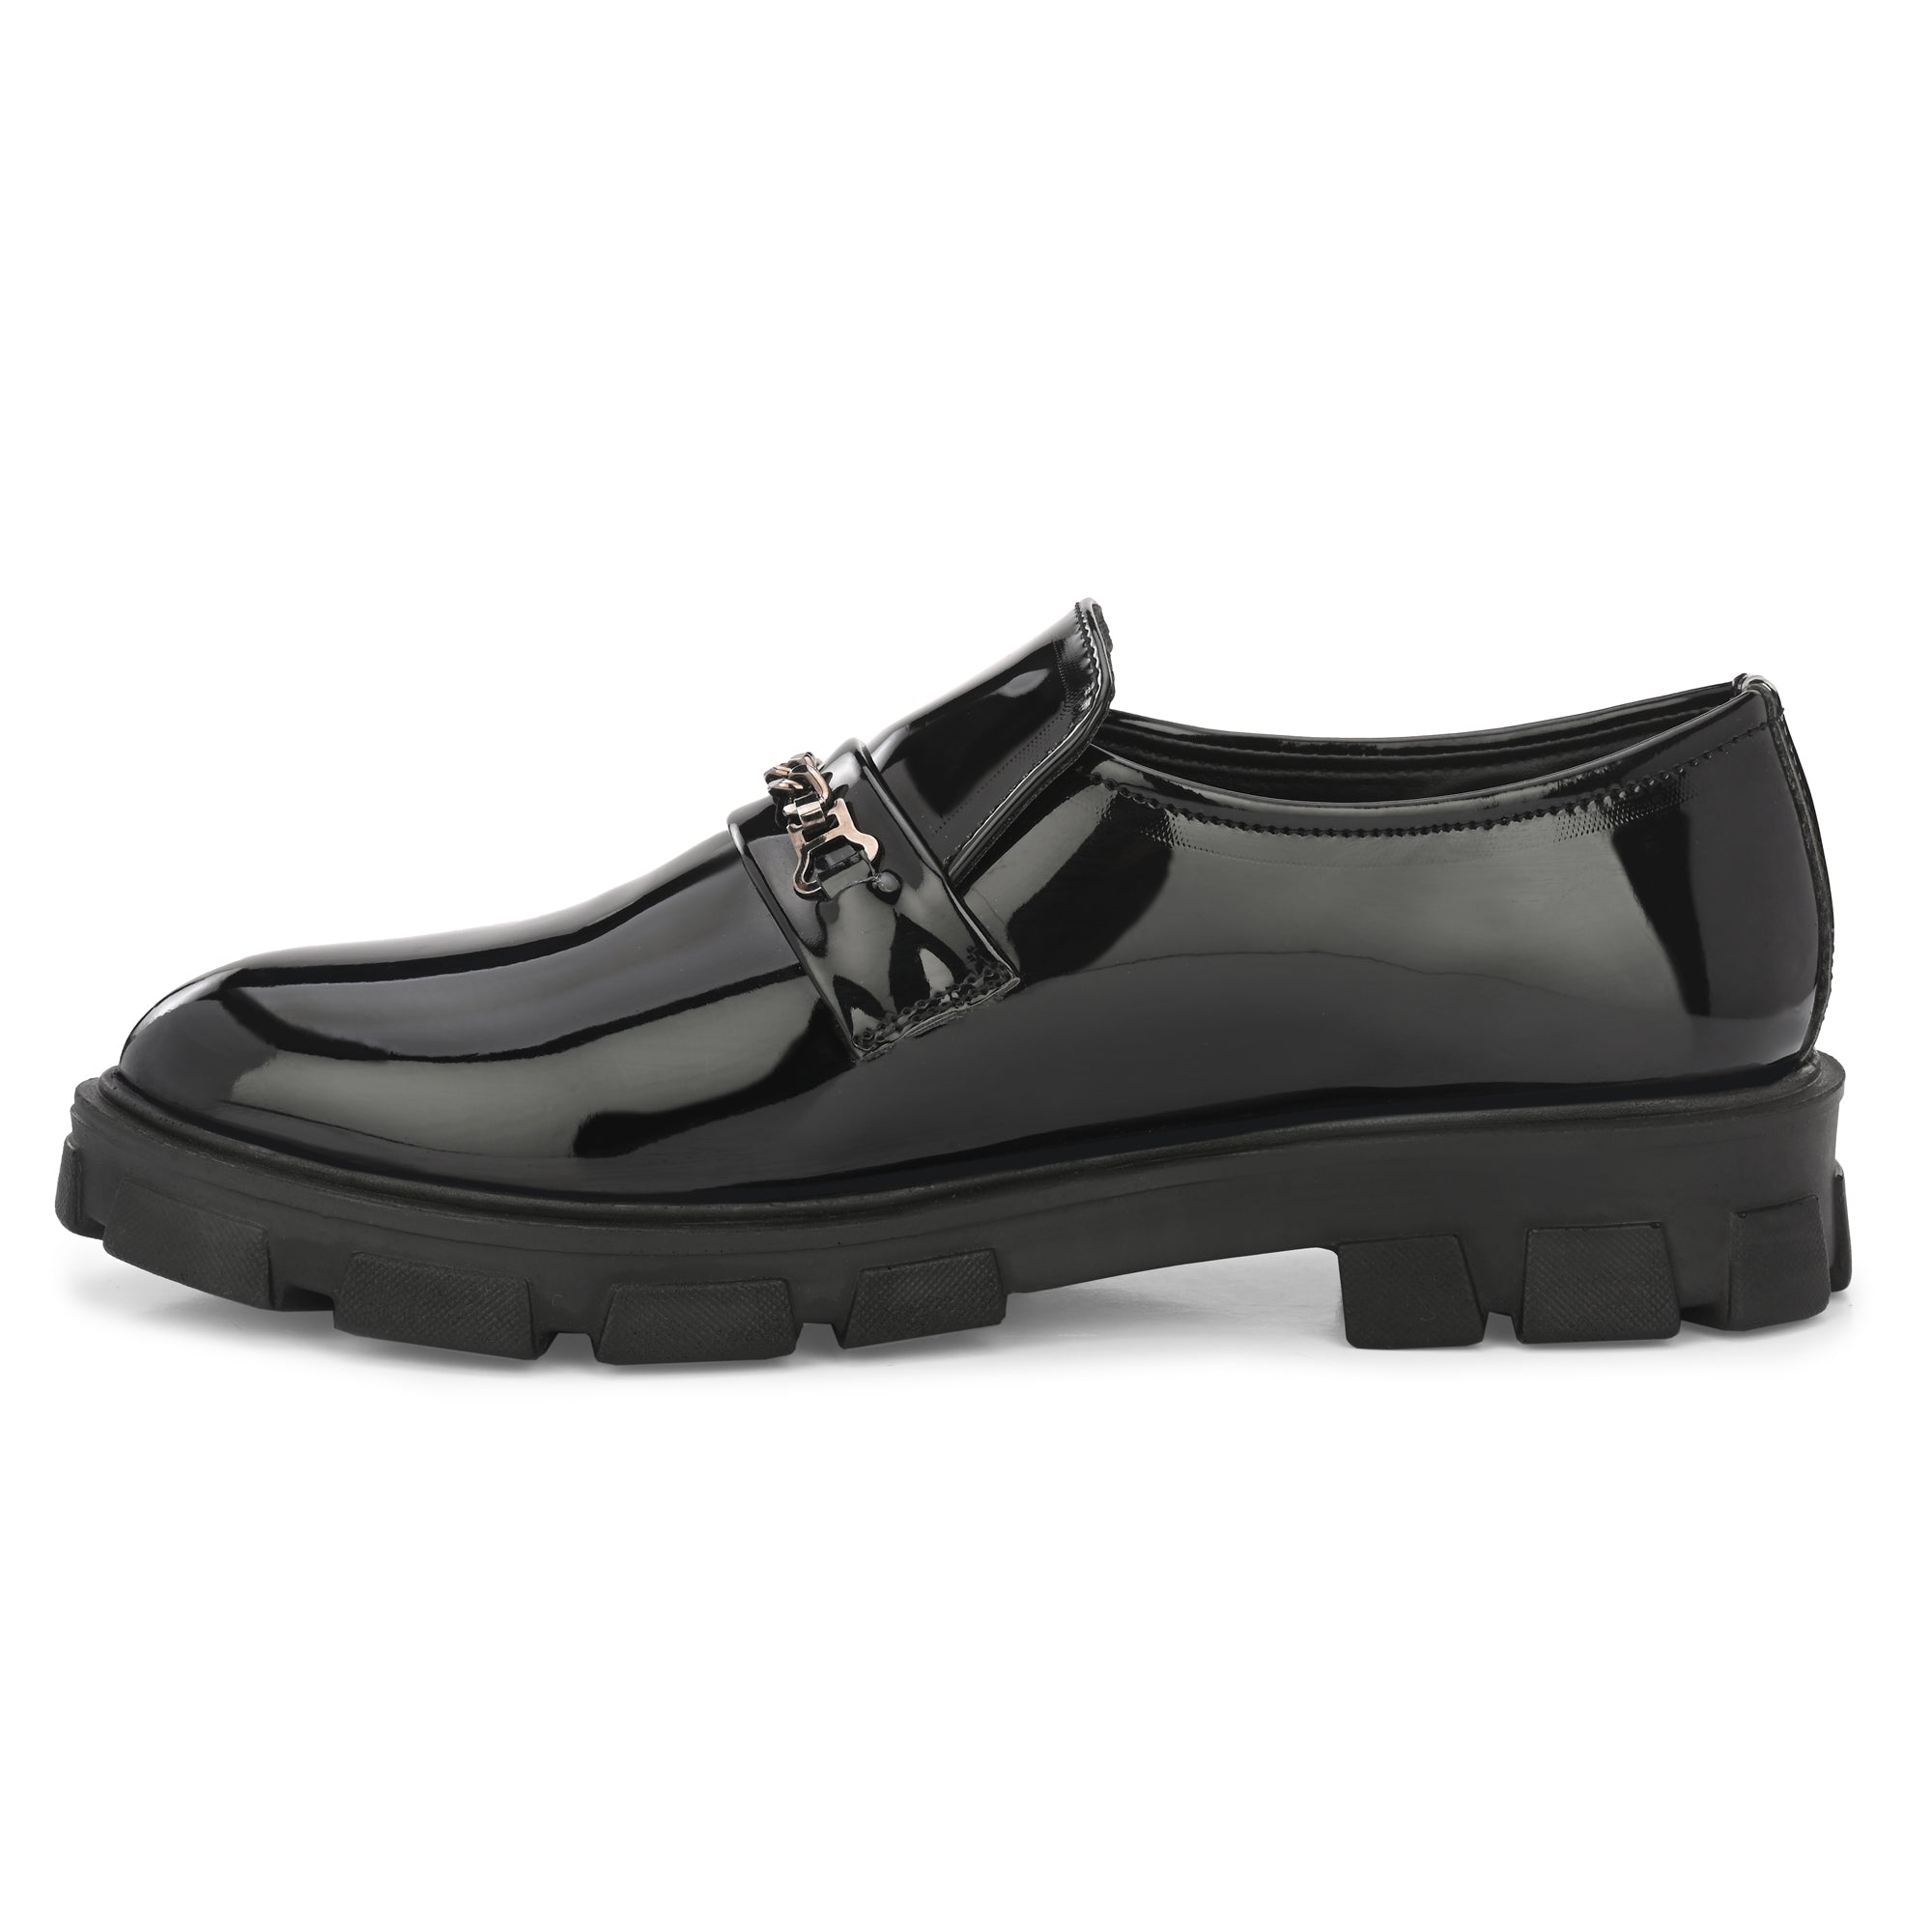 attitudist-black-high-heel-slip-on-moccasin-shoes-for-men